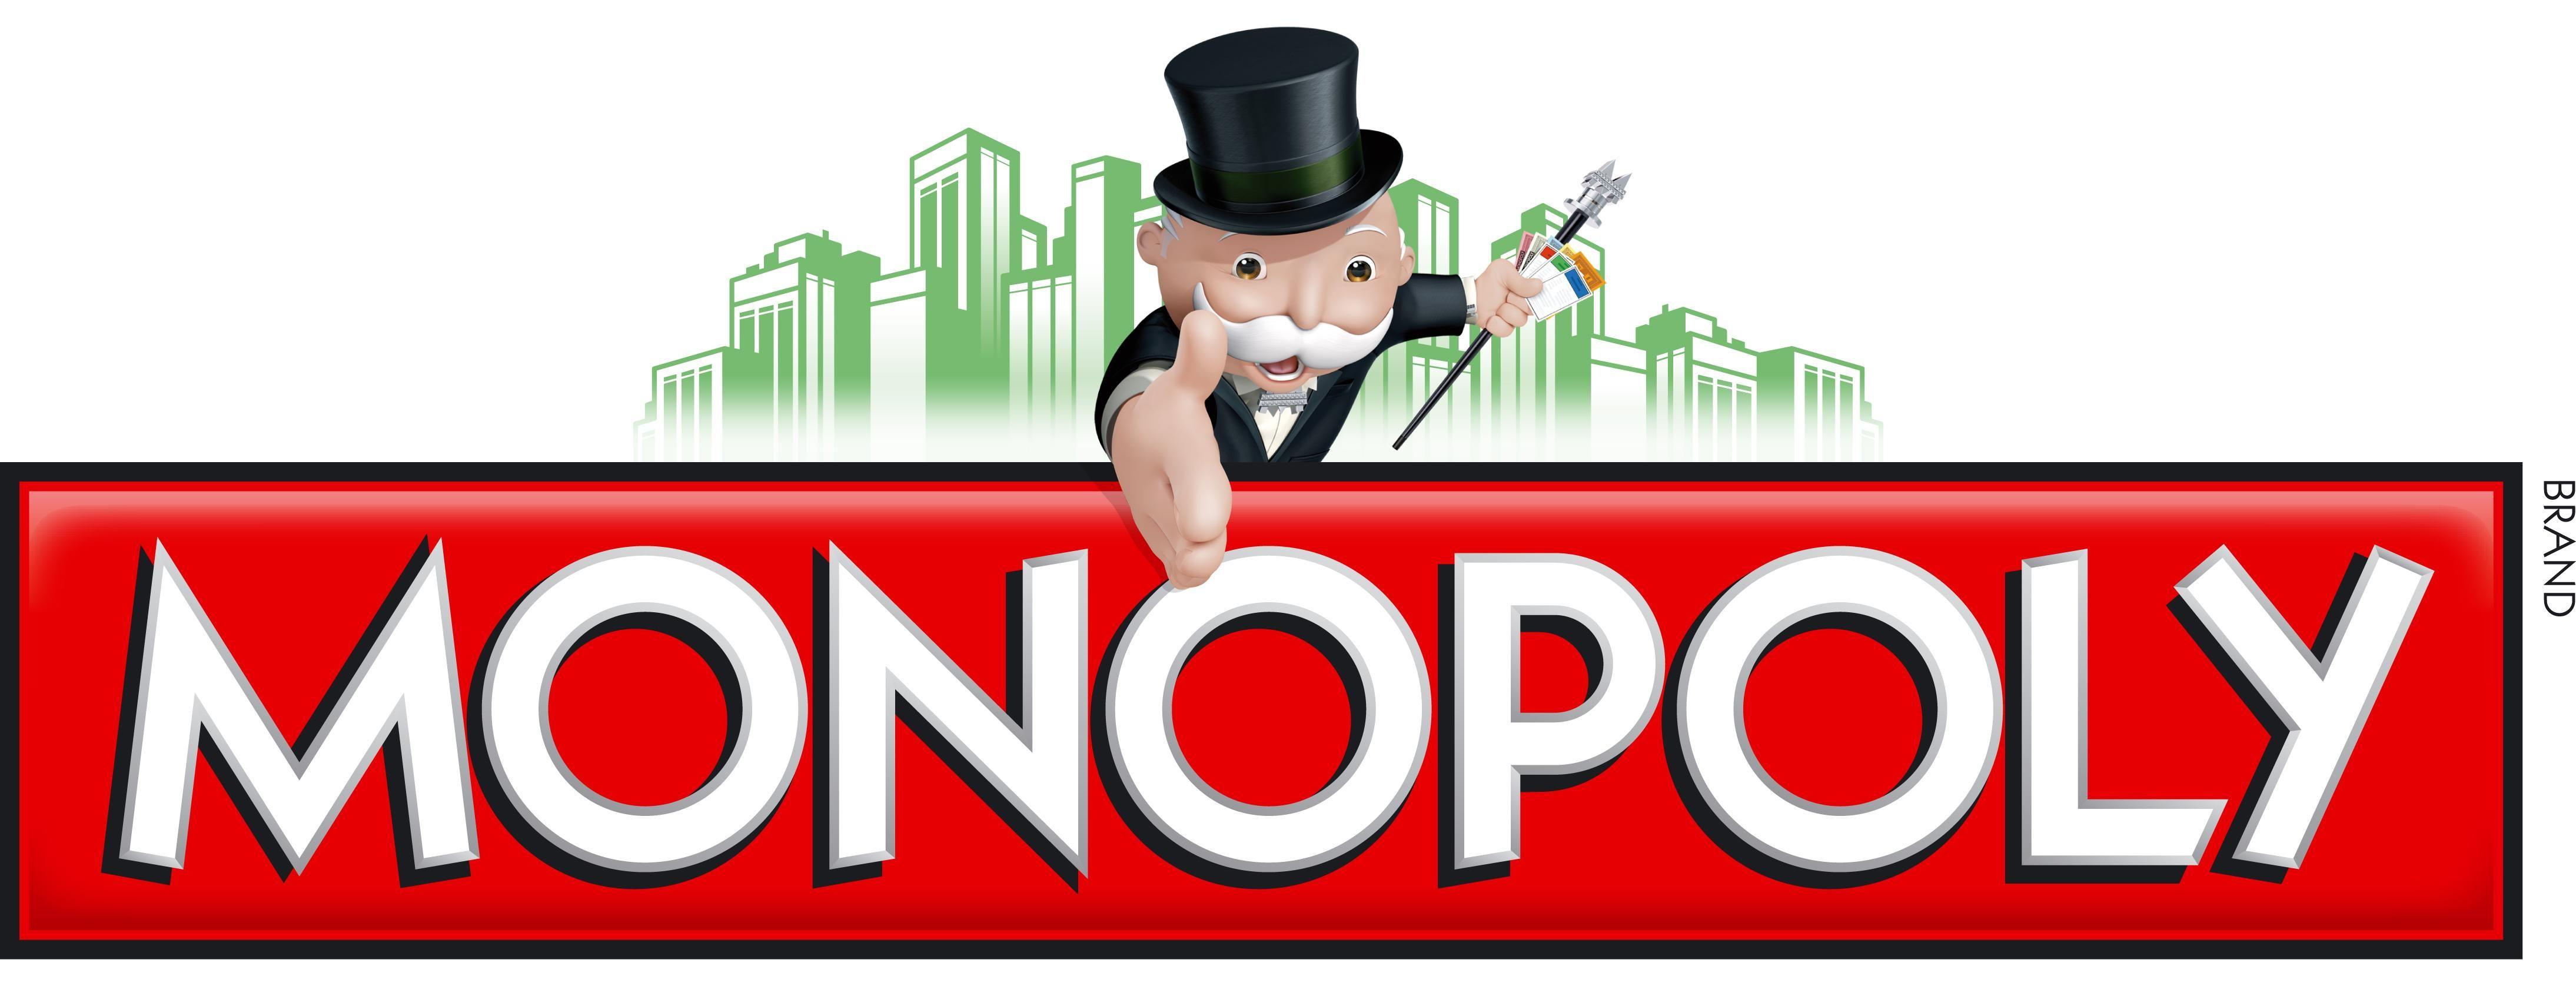 Monopoly Logo - Monopoly Logo | Logo Designs | Pinterest | Games, Monopoly and ...